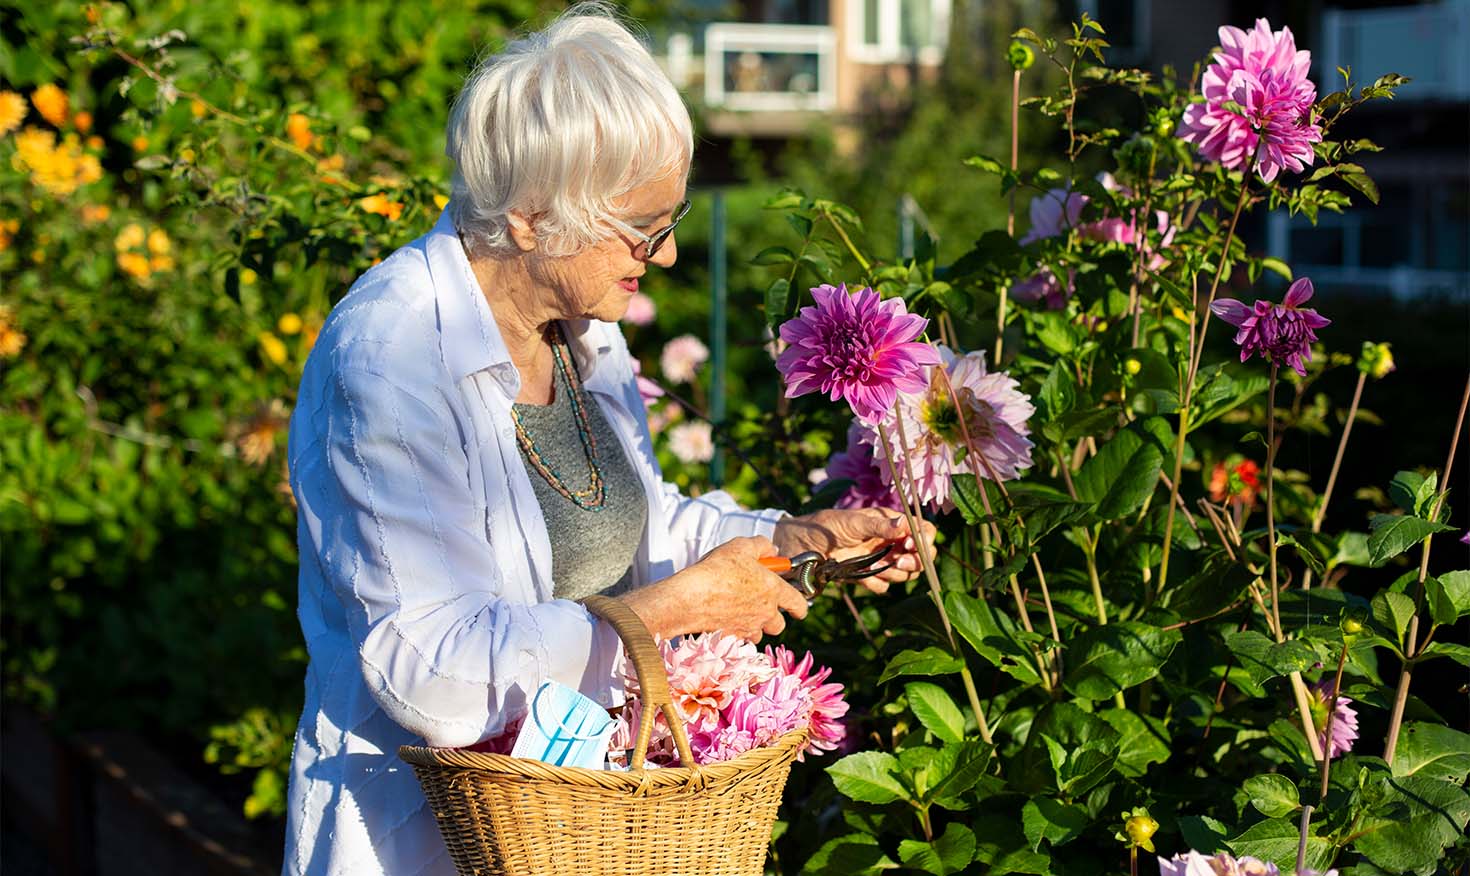 Senior woman holding a wicker basket cutting flowers 